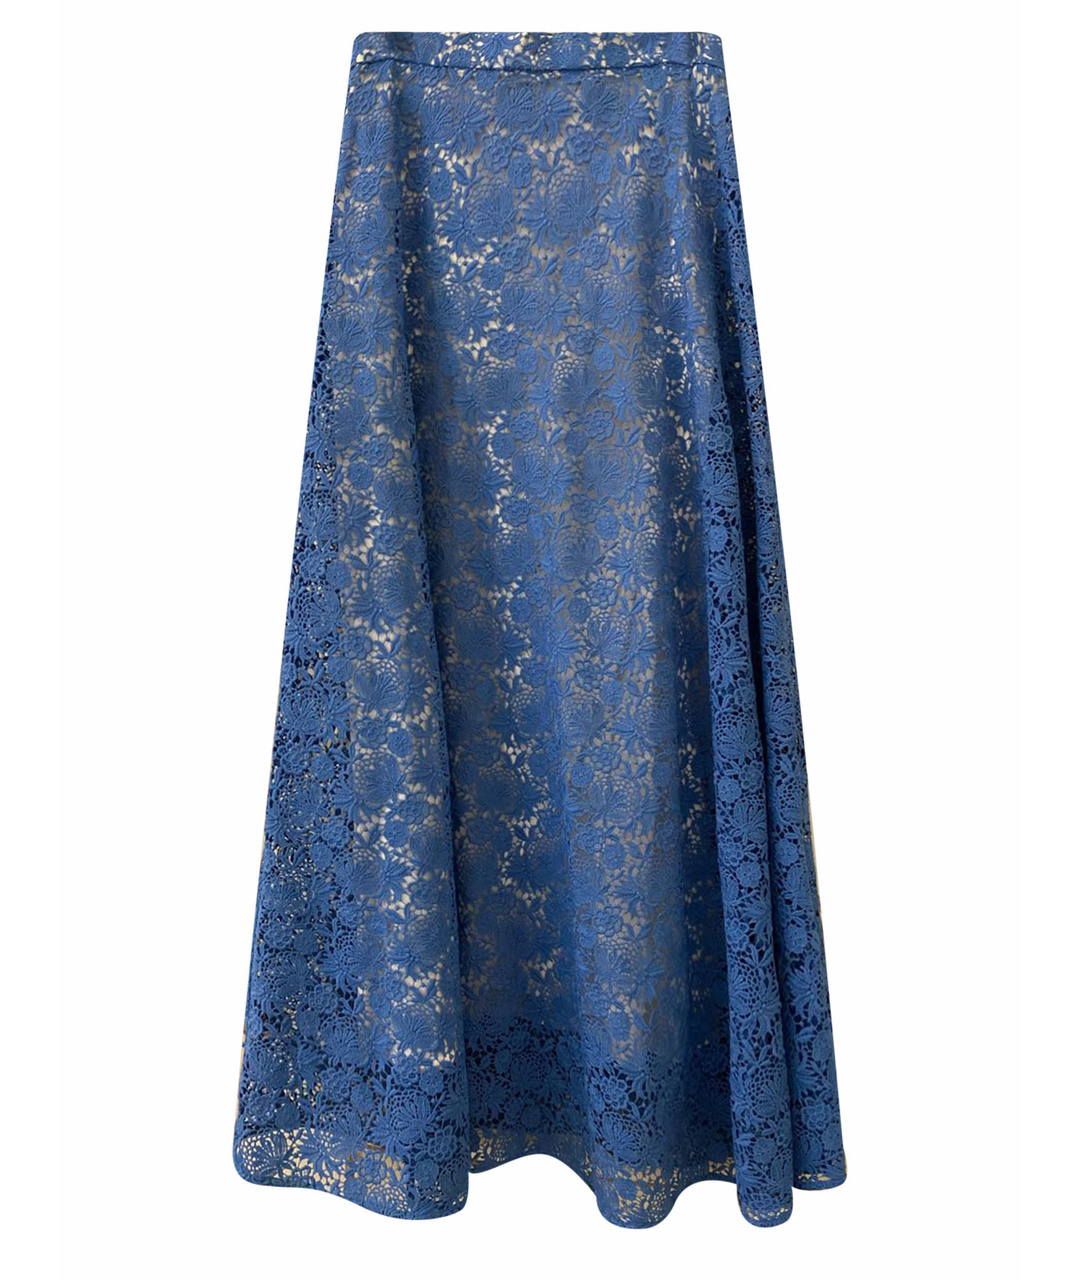 P.A.R.O.S.H. Голубая кружевная юбка макси, фото 1